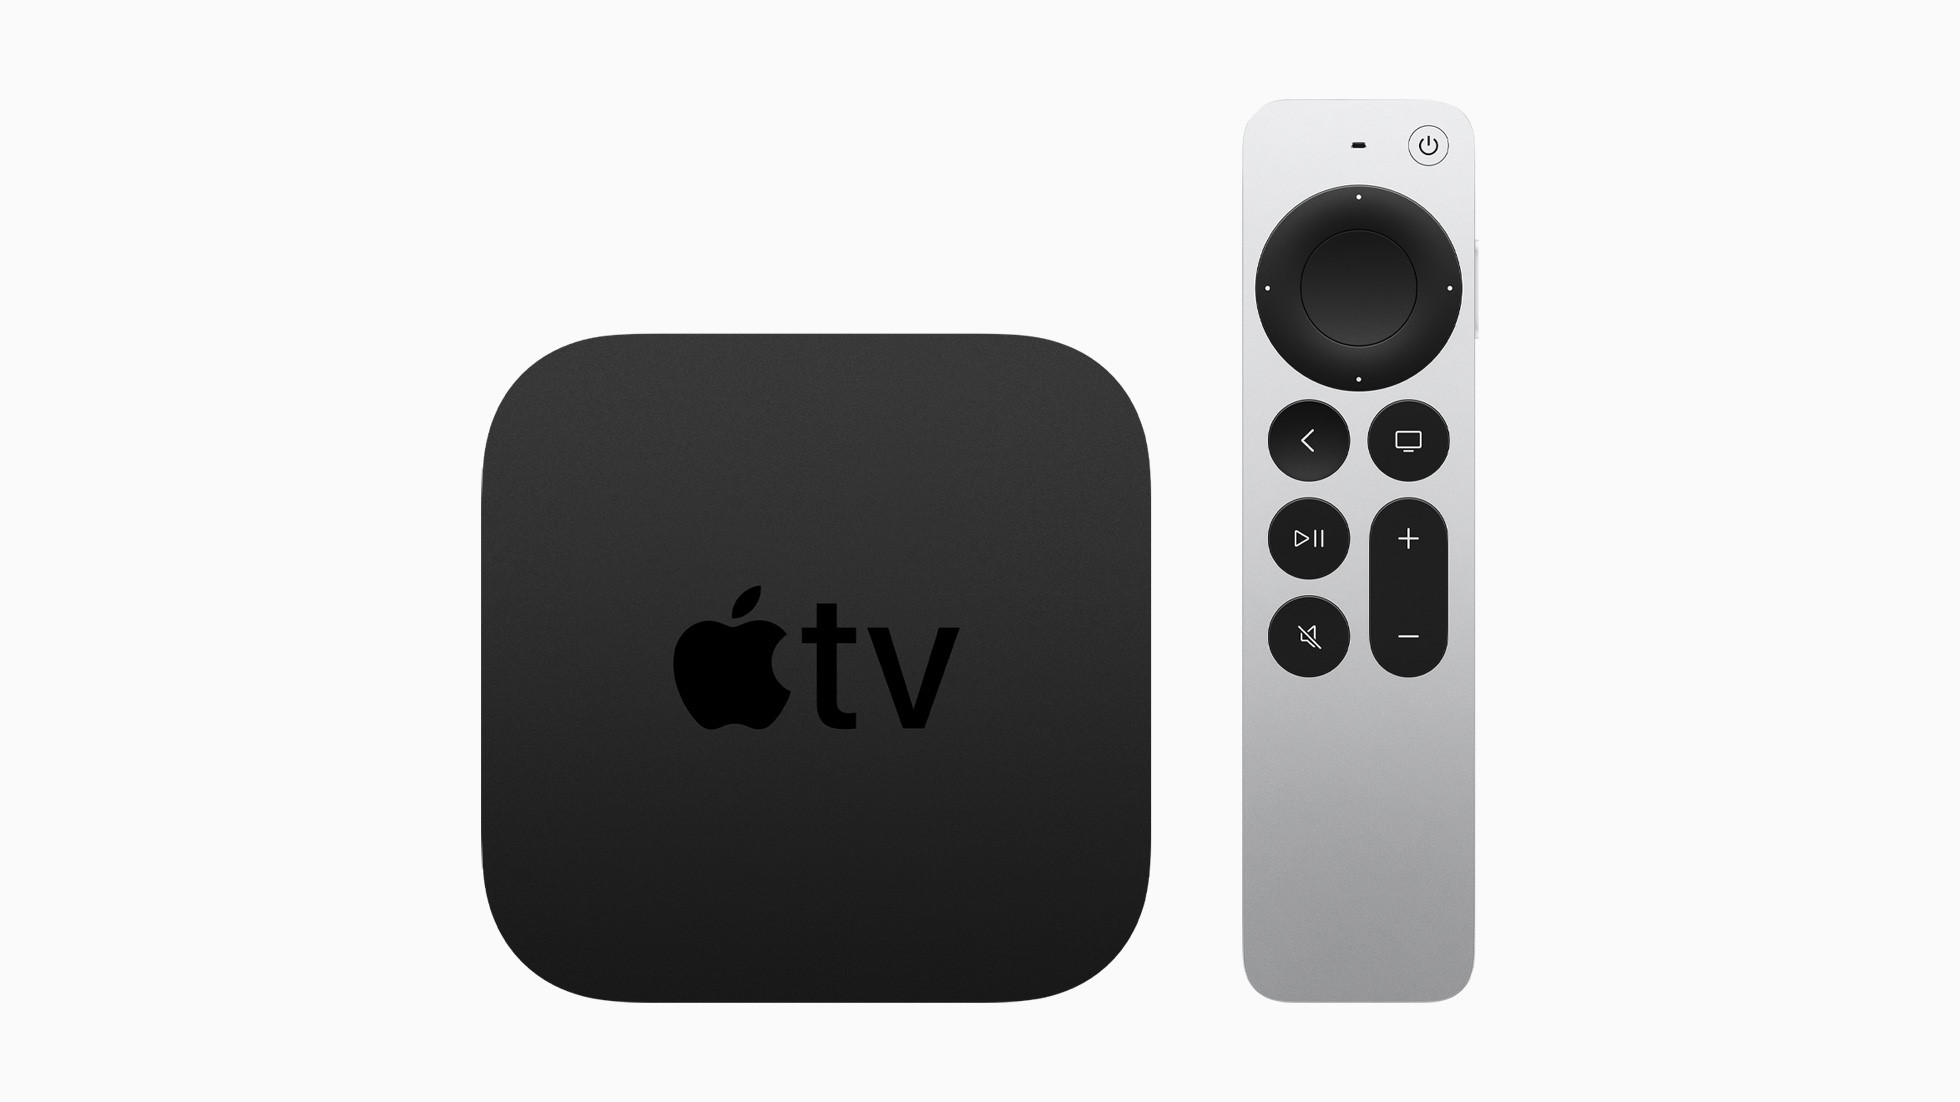 Zoom kommt aufs Apple TV 4K